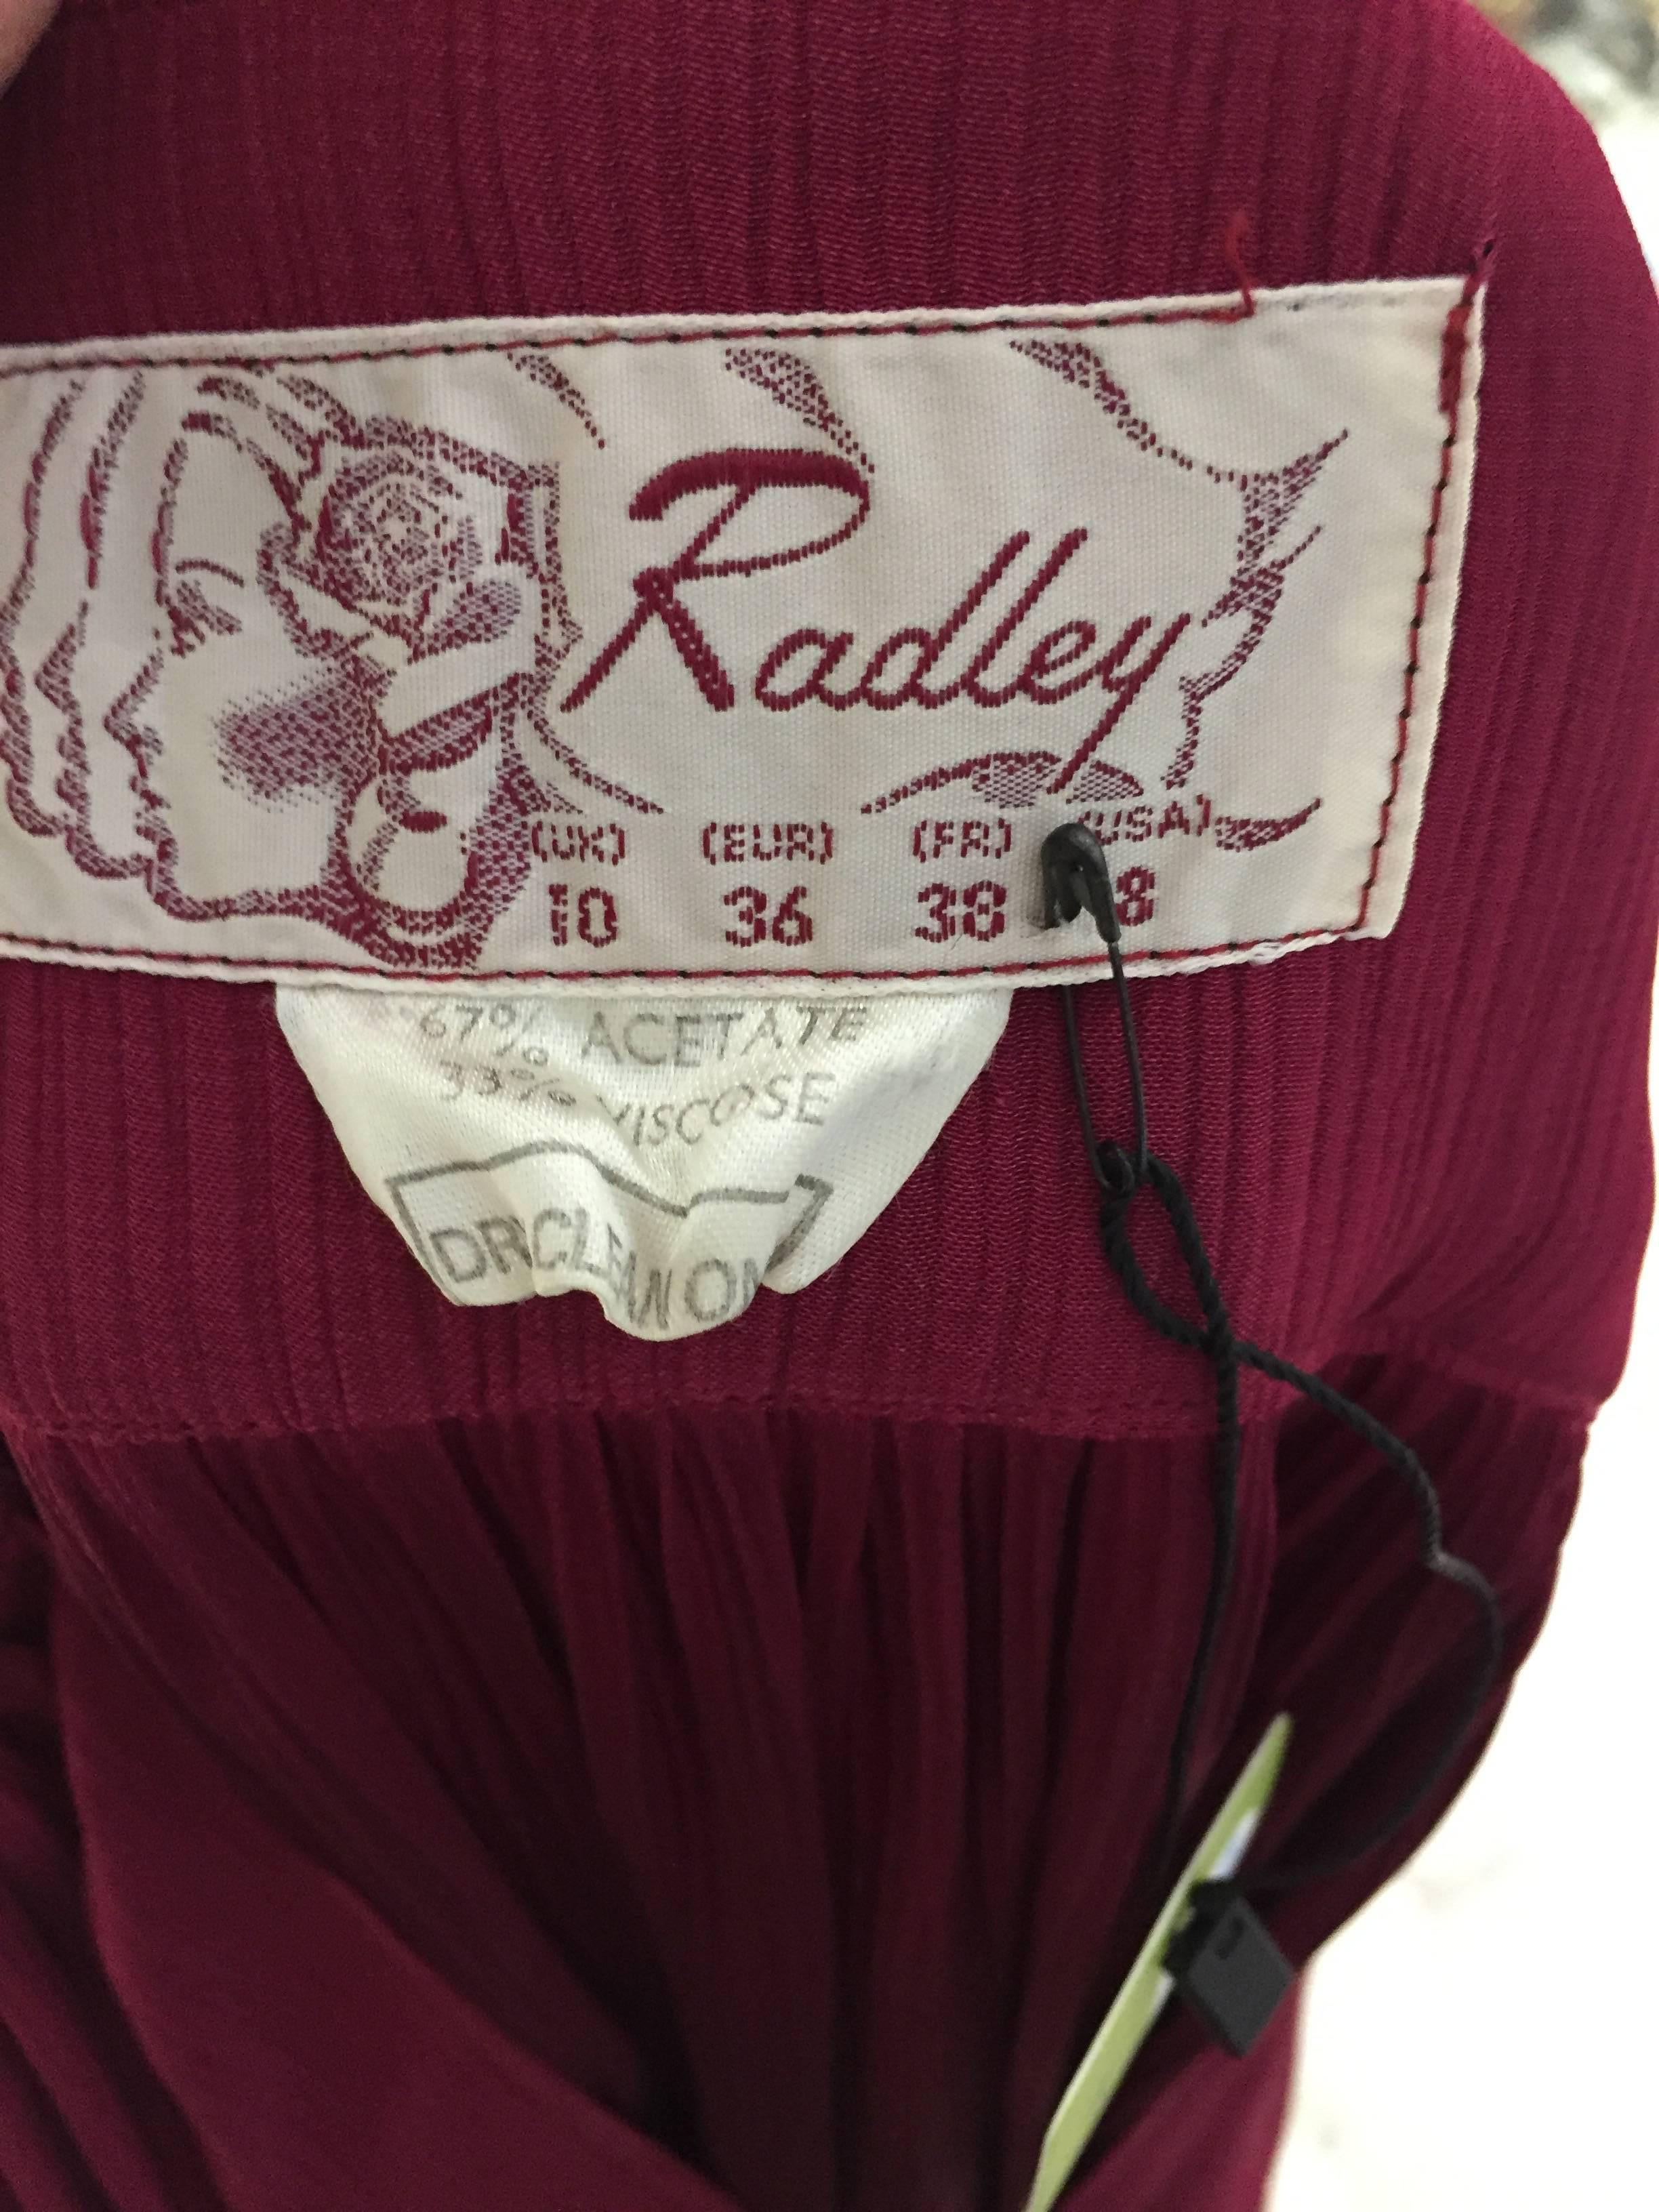 1970s Radley maxi V neck dress.
Size 6